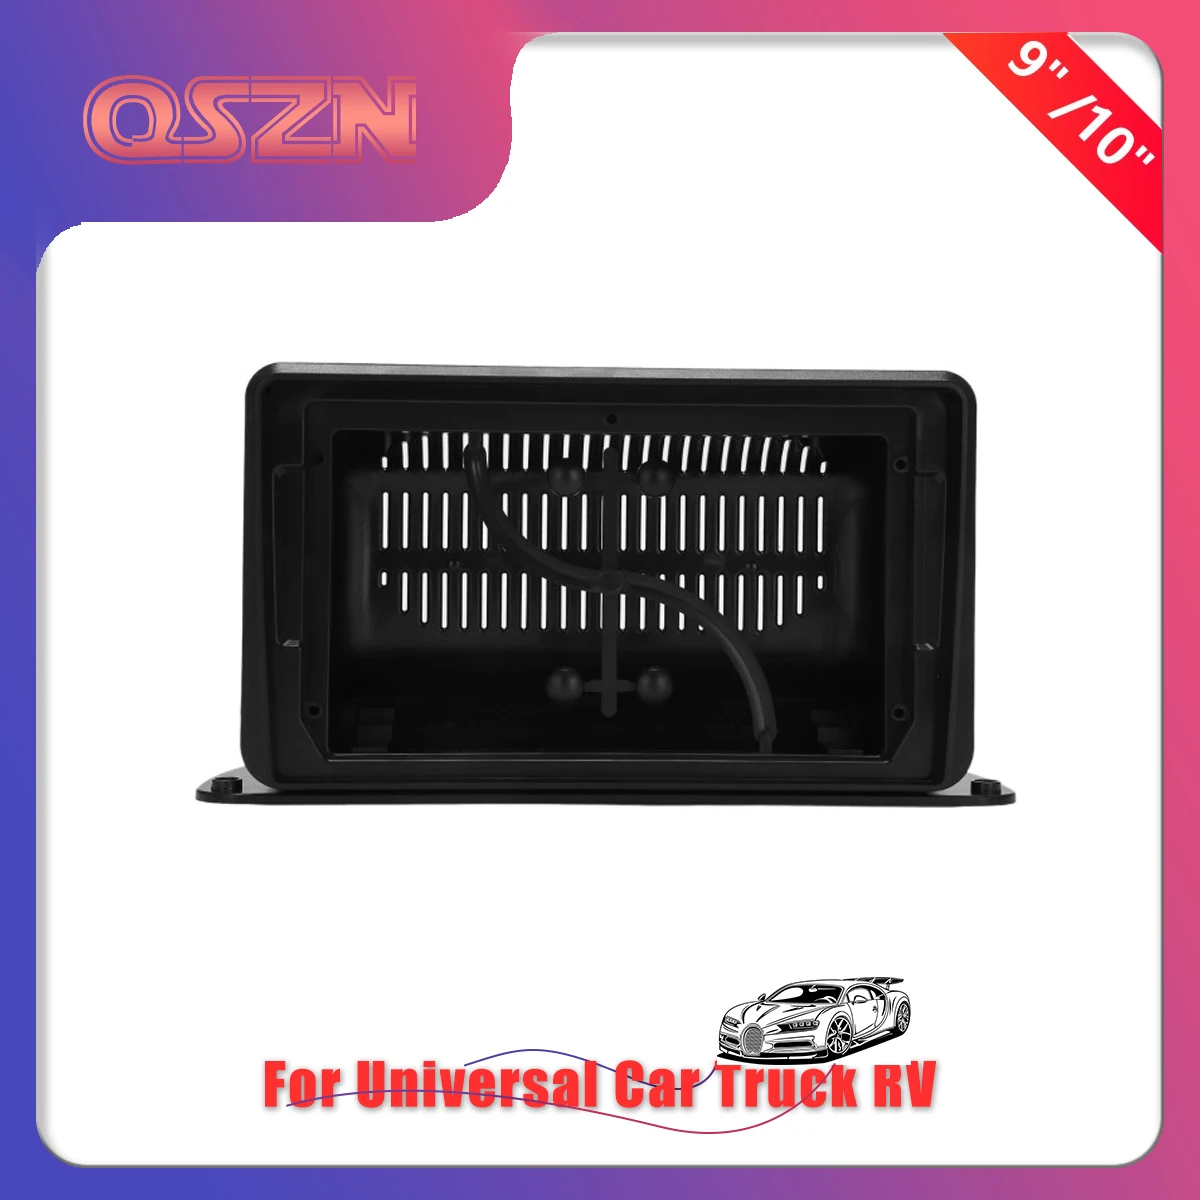 Купи QSZN 9 " 10" 2 Din Car radio DVD Installation Fascias Panel For Car Truck Motorhome RV Audio Dash Fit Panel Dash Trim Kit Frame за 489 рублей в магазине AliExpress